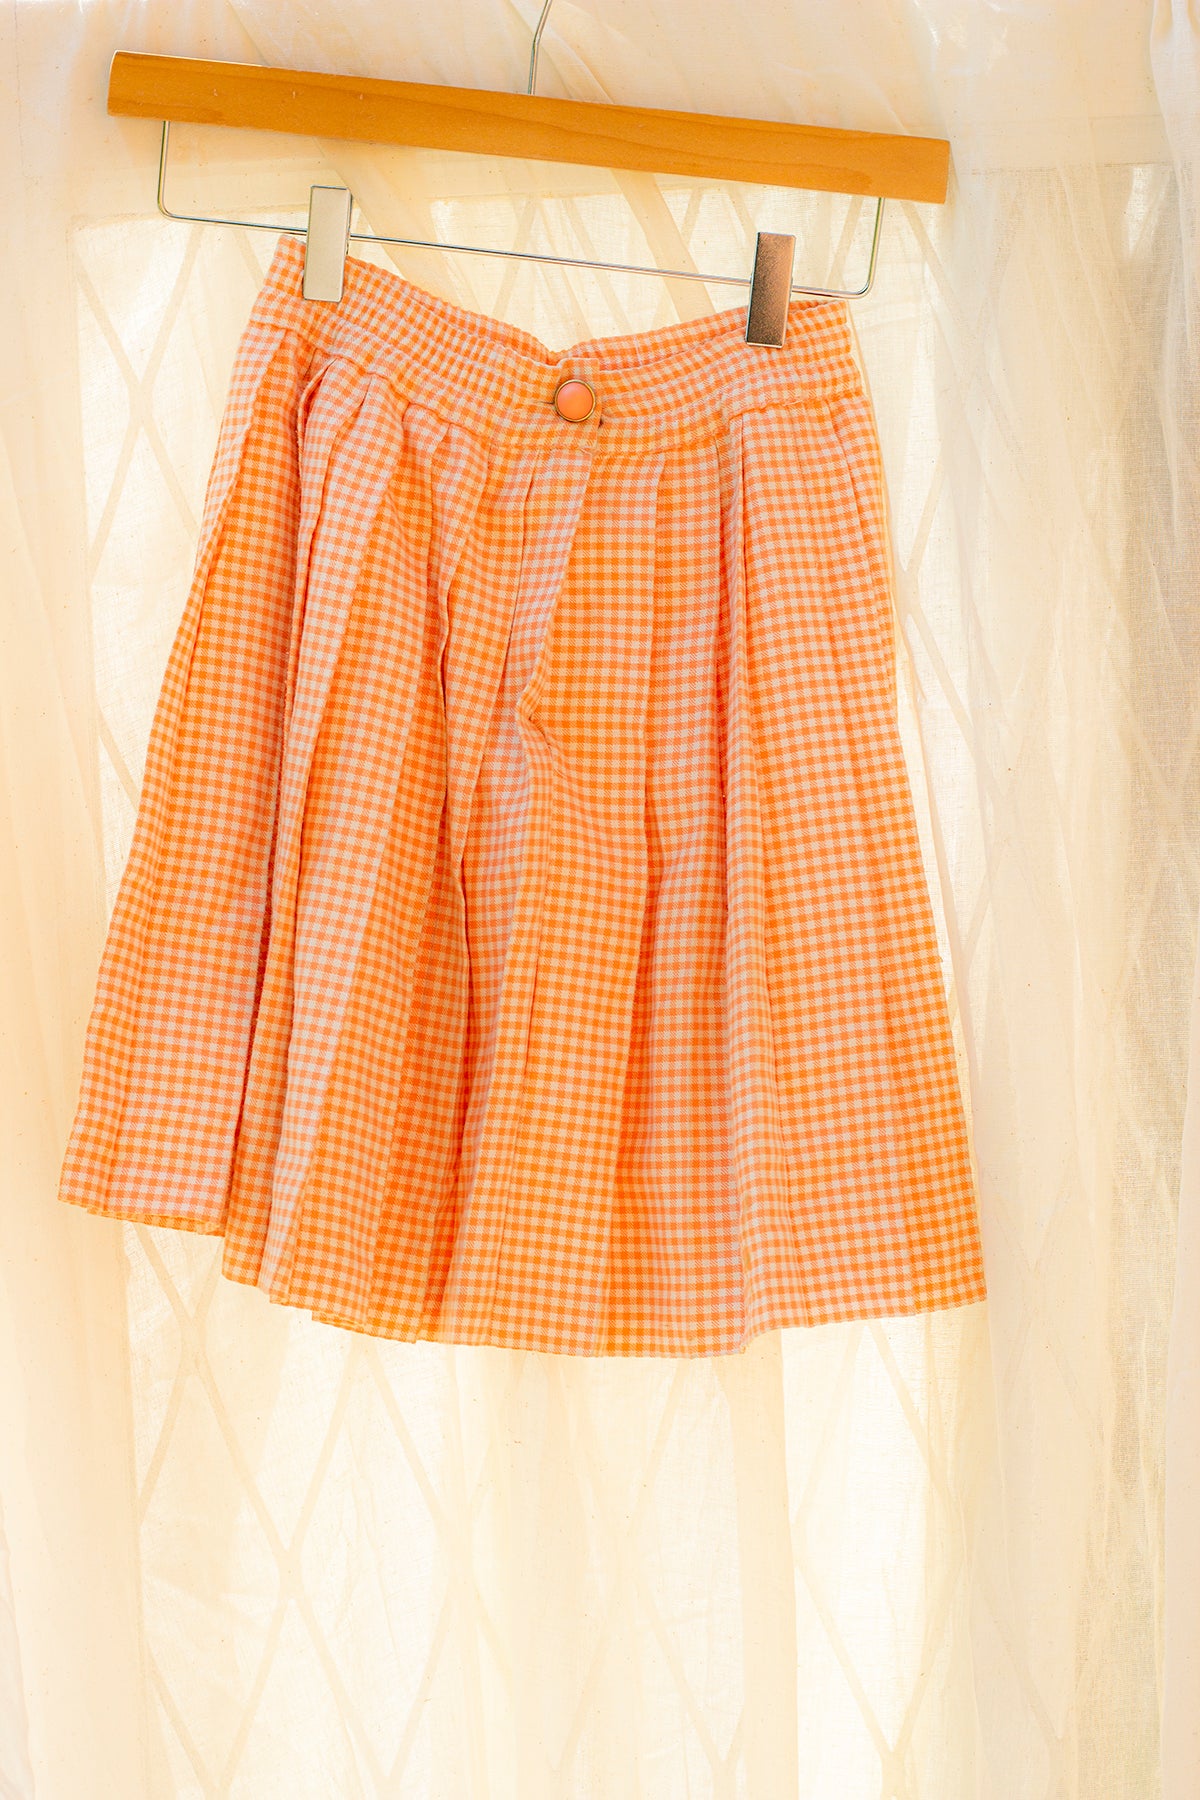 Millie Skirt - Sugar + Style